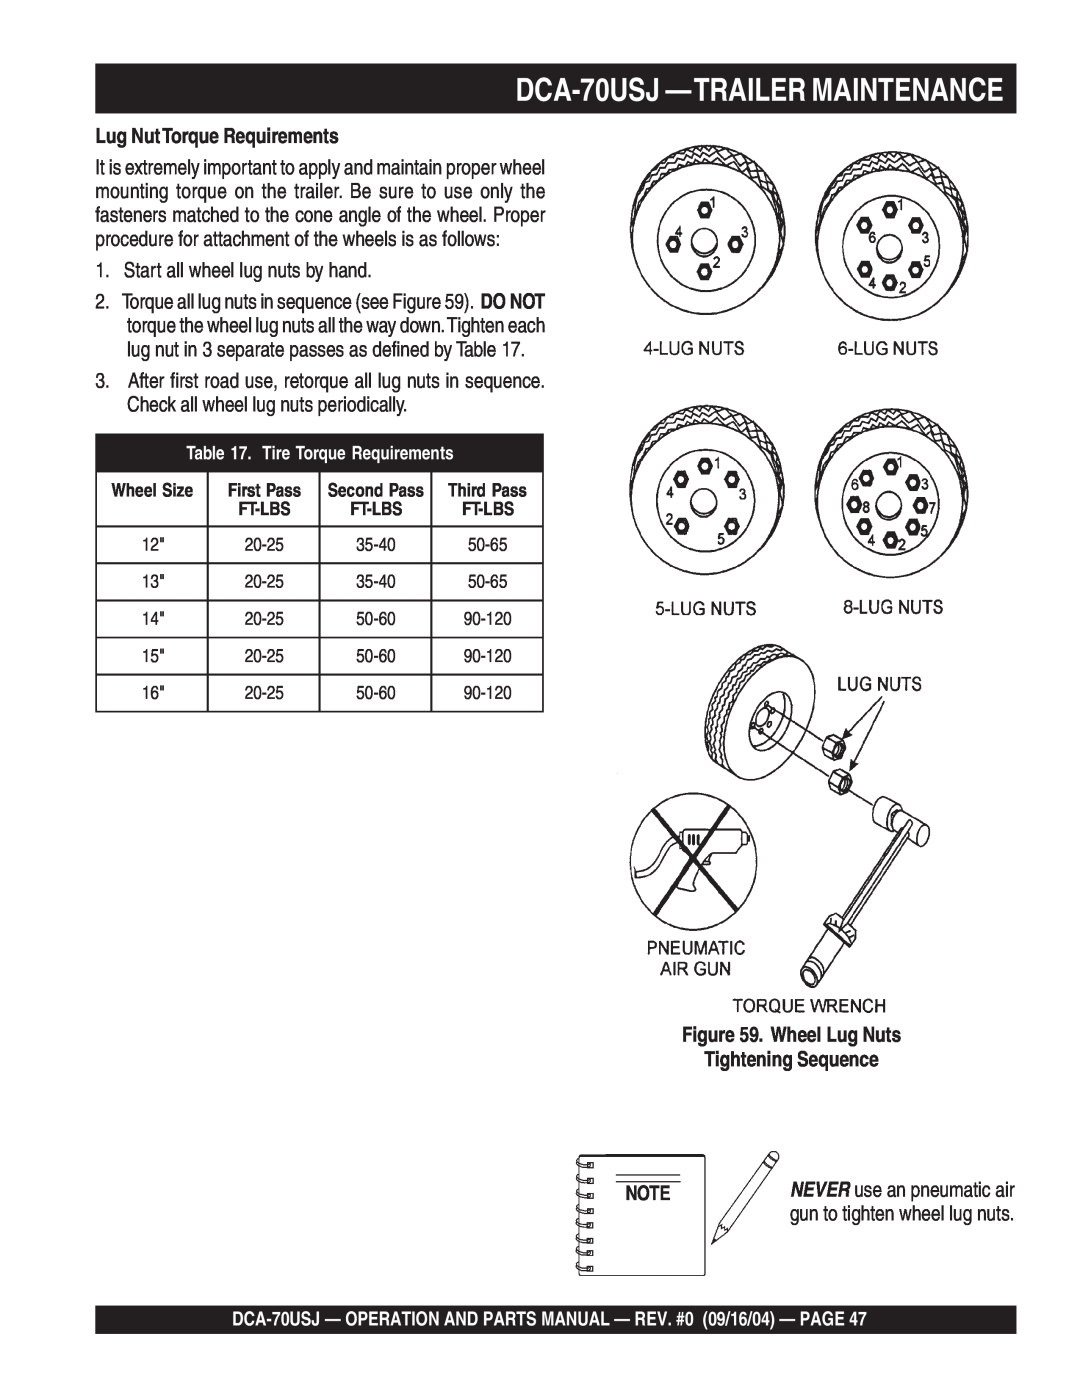 Multiquip dca-70usj Lug NutTorque Requirements, Wheel Lug Nuts Tightening Sequence, DCA-70USJ —TRAILERMAINTENANCE 